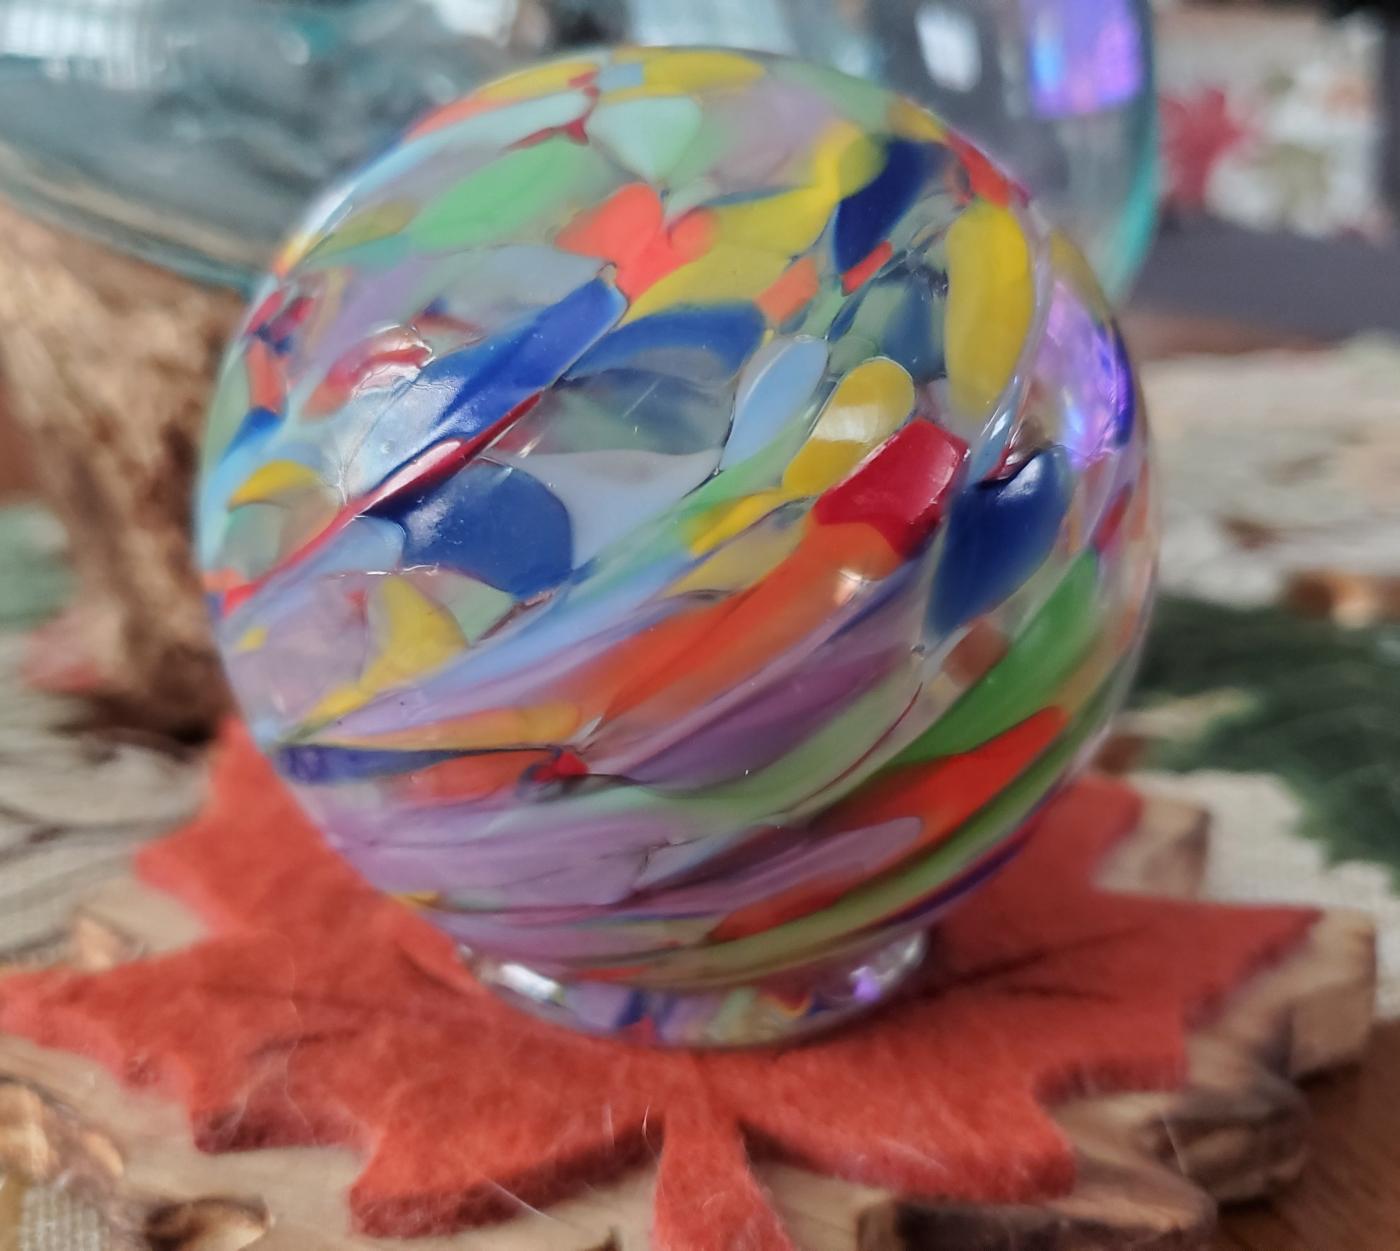  Merwinsville Hotel glass orb treasure hunt